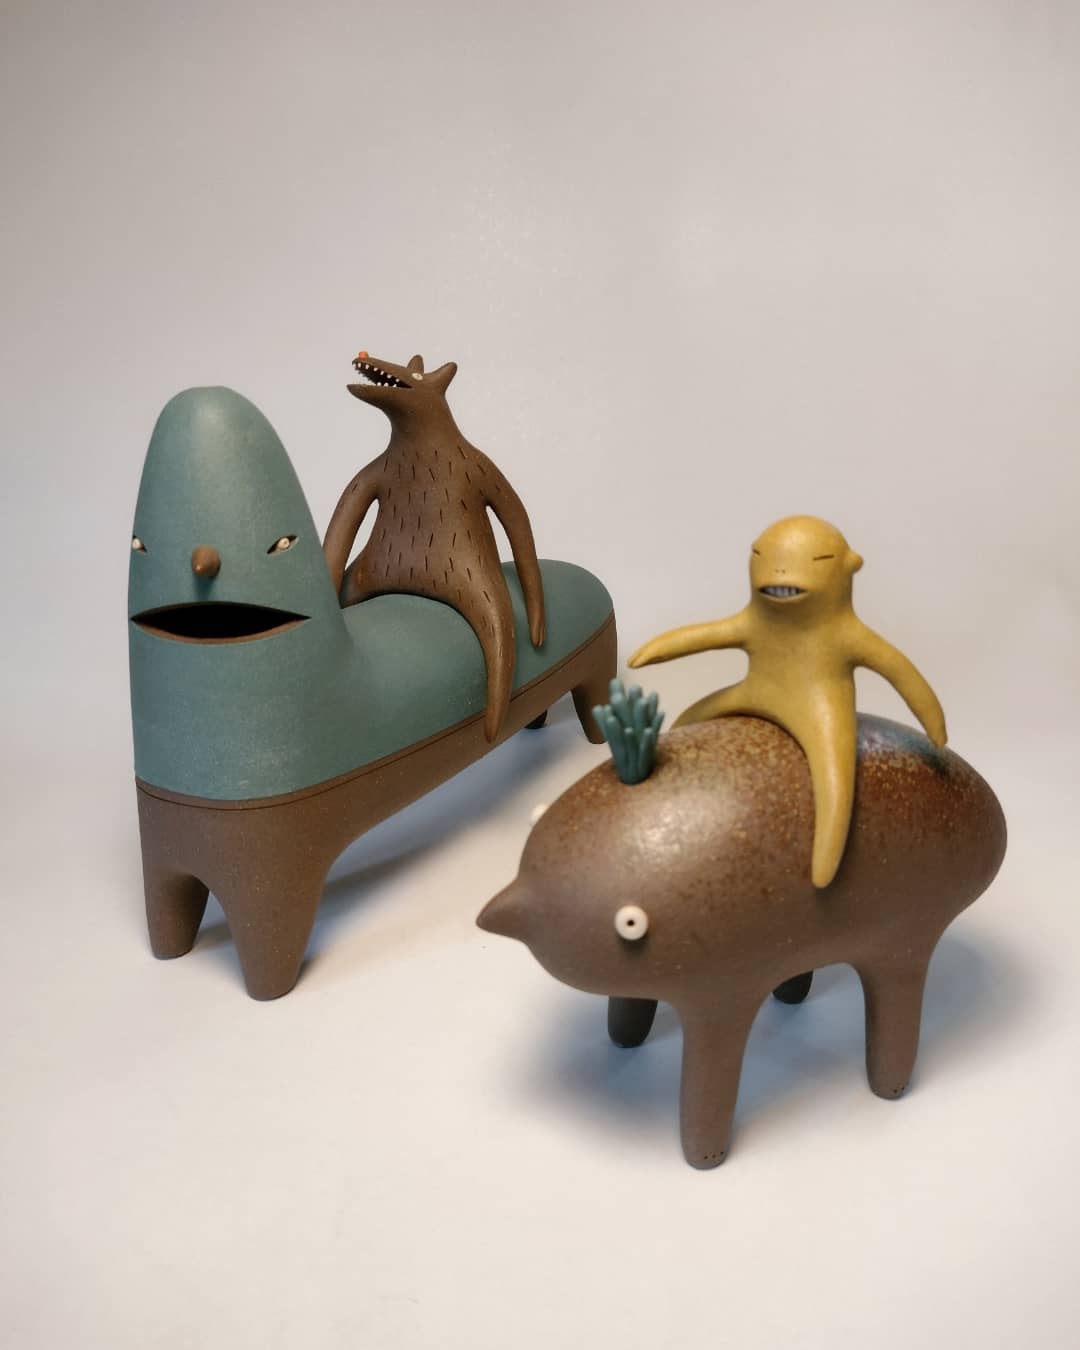 Amusing Ceramic Sculptures Of Quirky Creatures By Luciano Polverigiani (30)